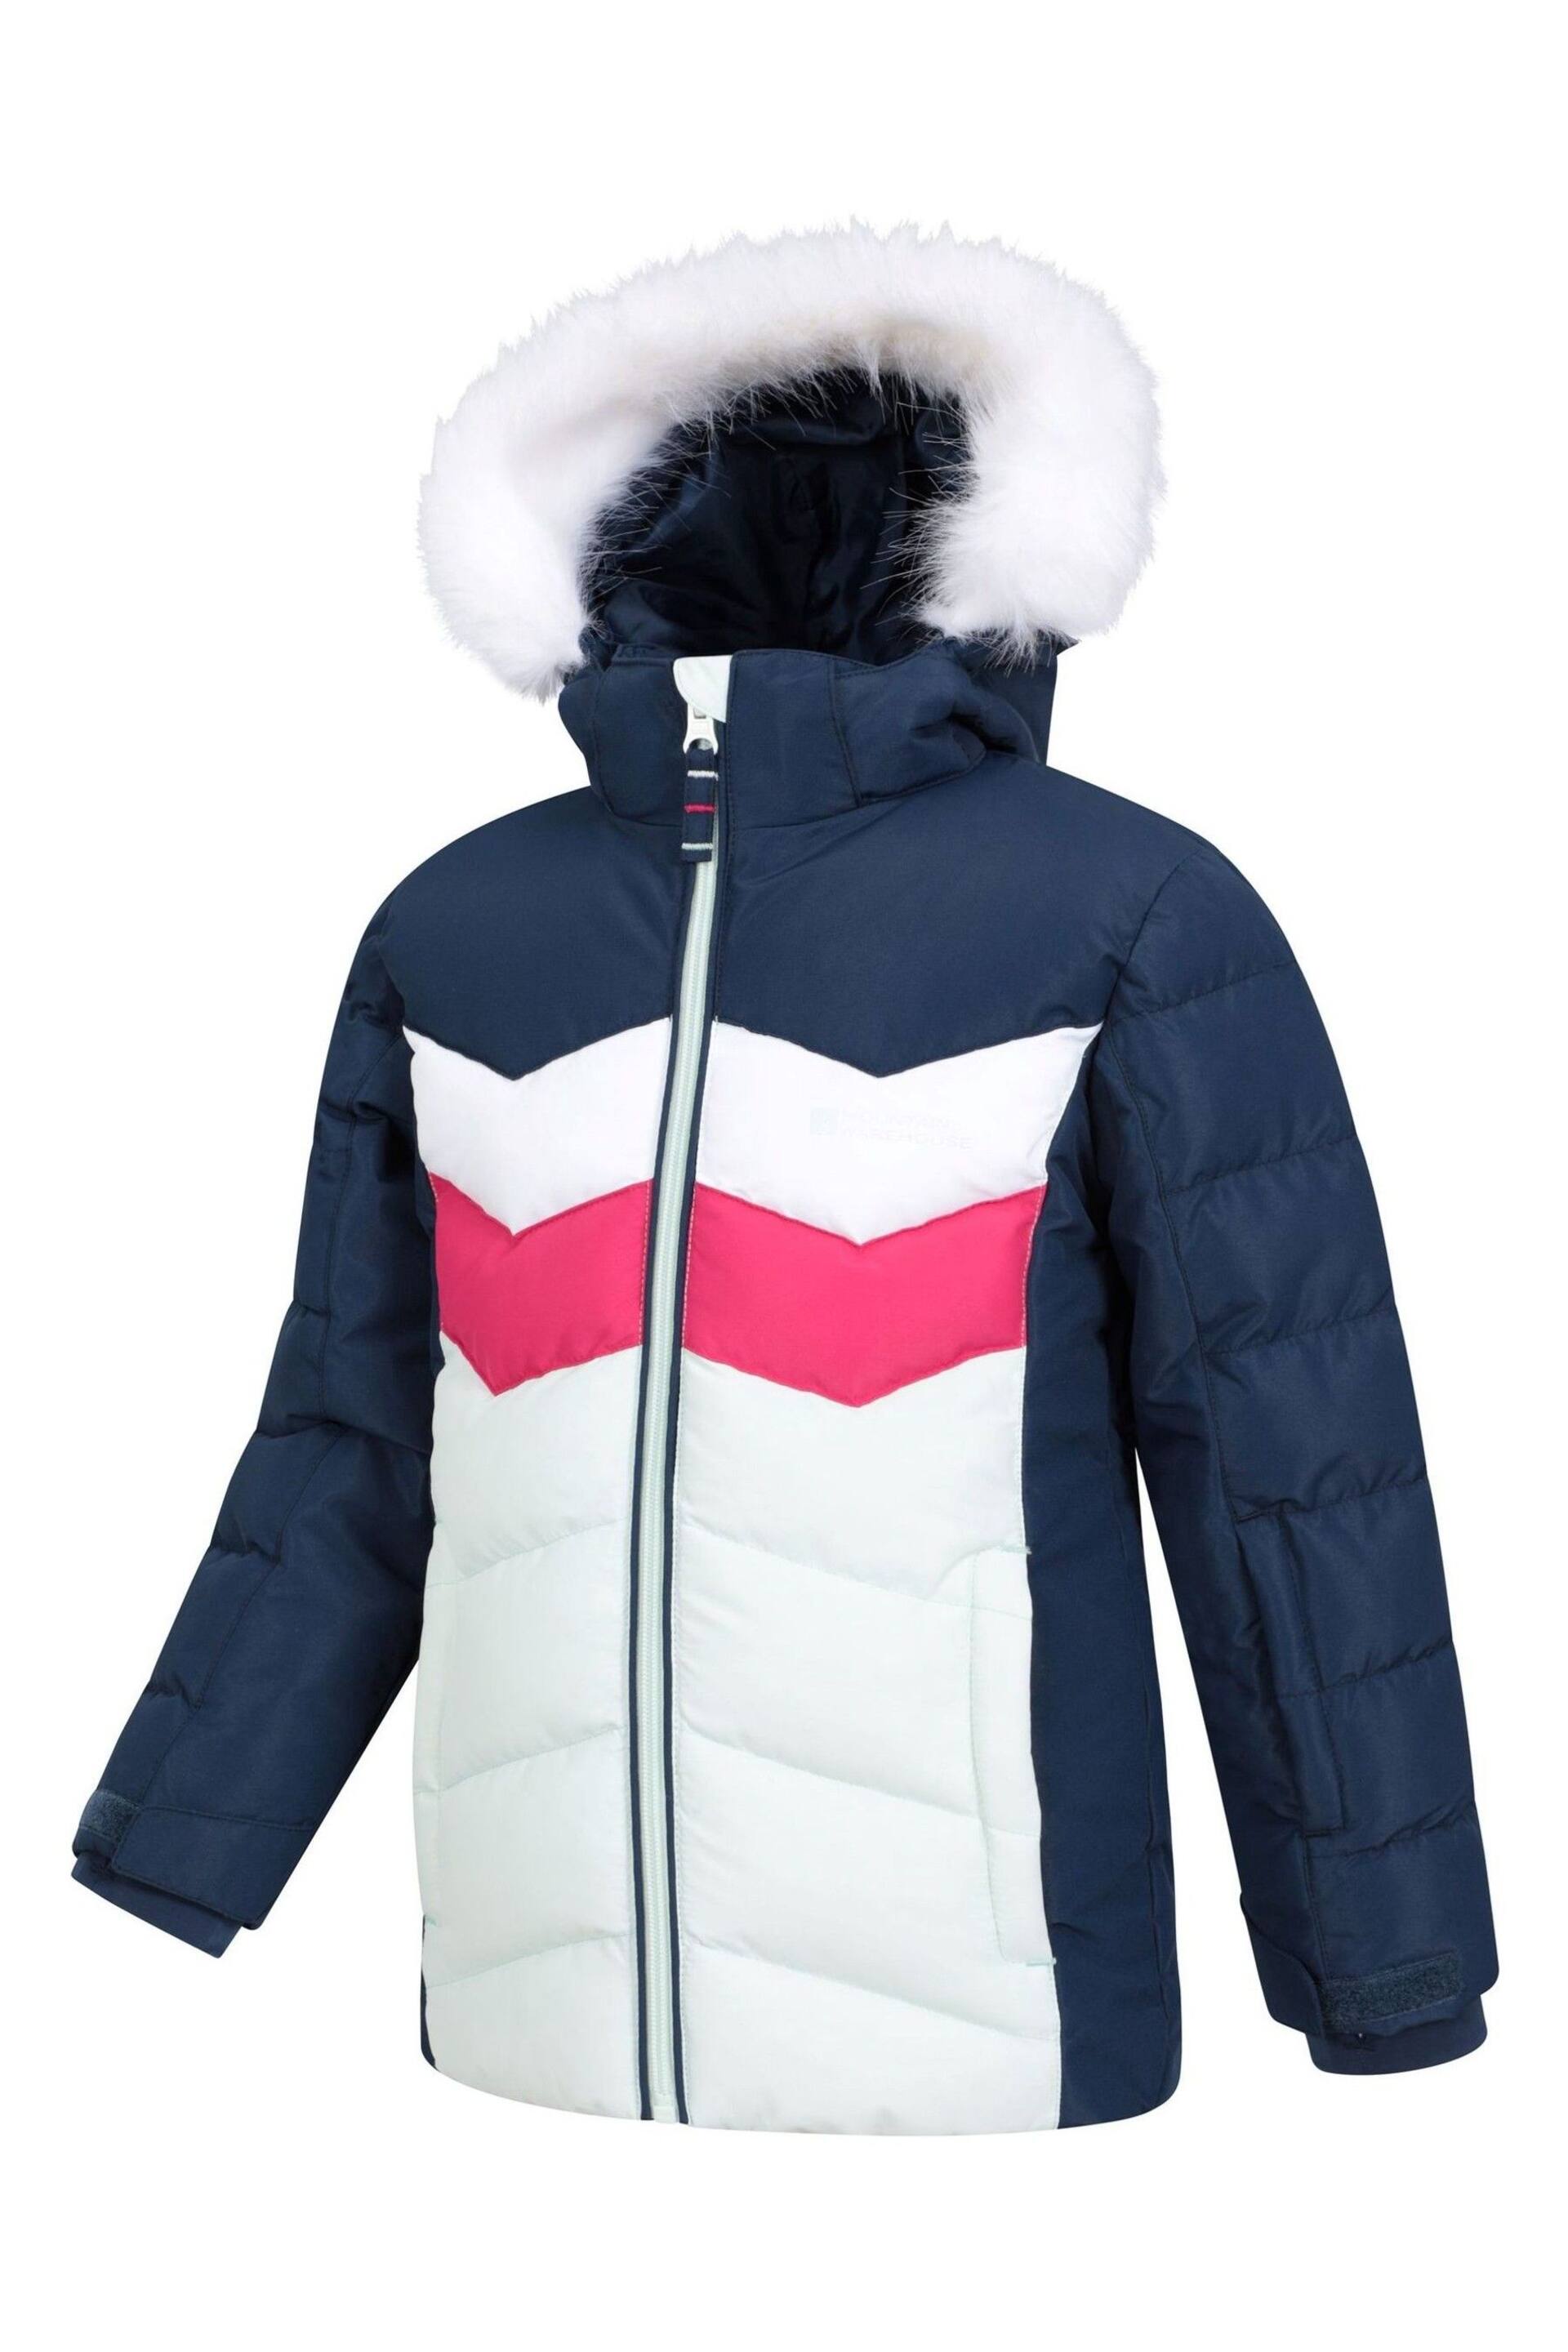 Mountain Warehouse Grey Kids Arctic Water Resistant Ski Jacket - Image 3 of 5